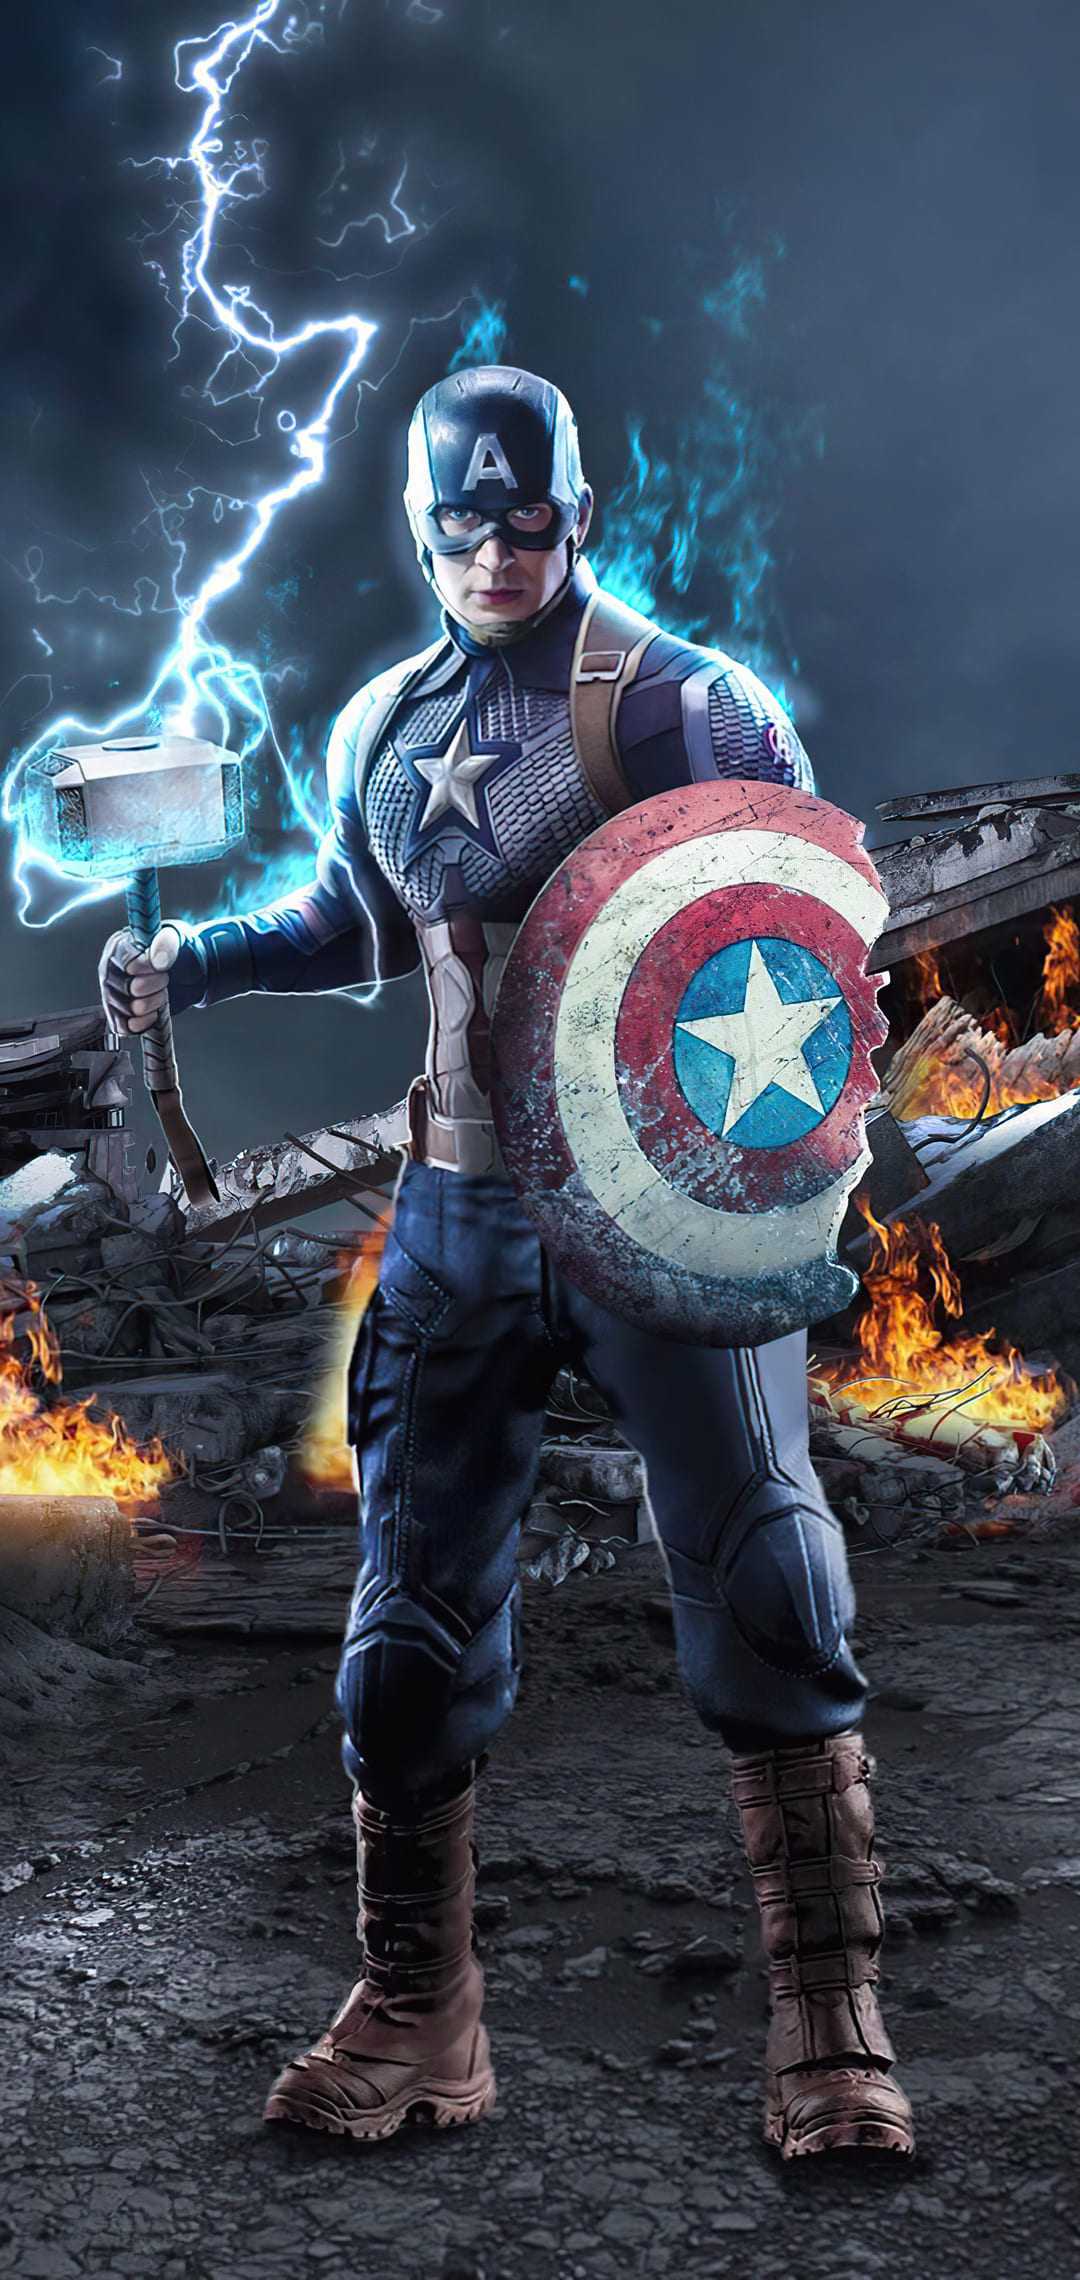 Captain America with broken shield Wallpaper 4k Ultra HD ID7532